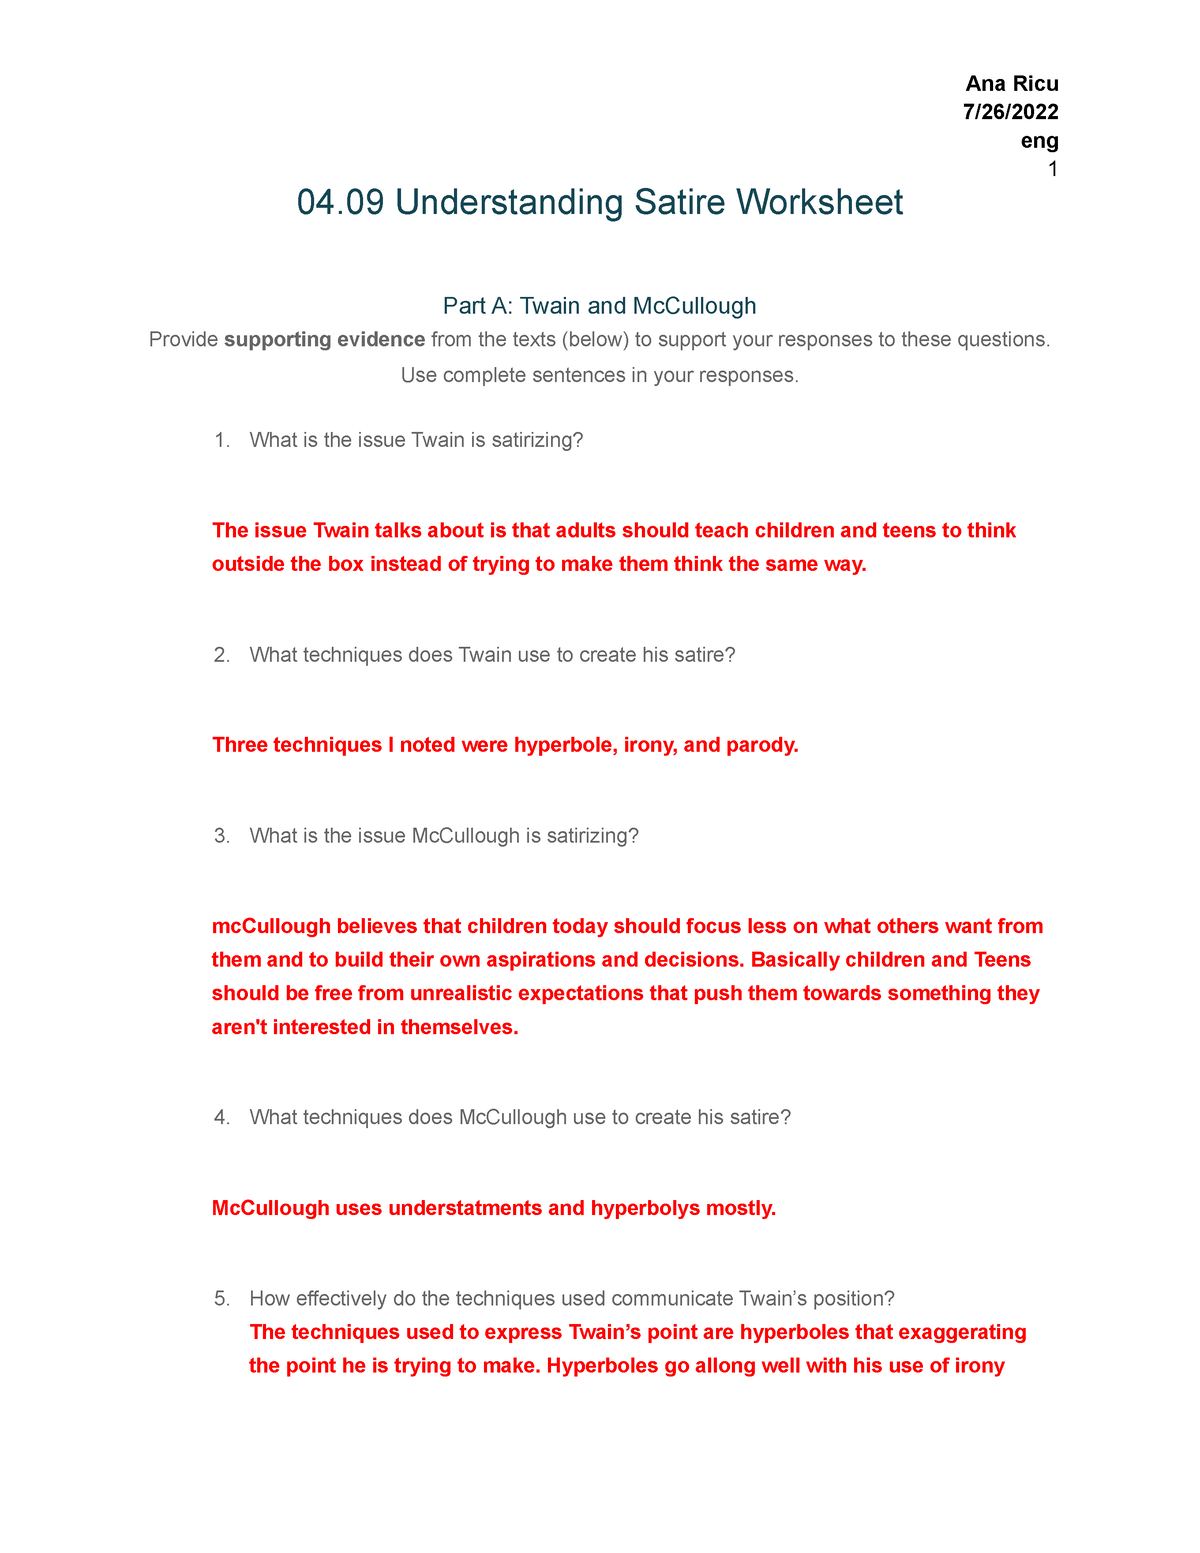 04-09-understanding-satire-ana-ricu-7-26-eng-1-04-understanding-satire-worksheet-part-a